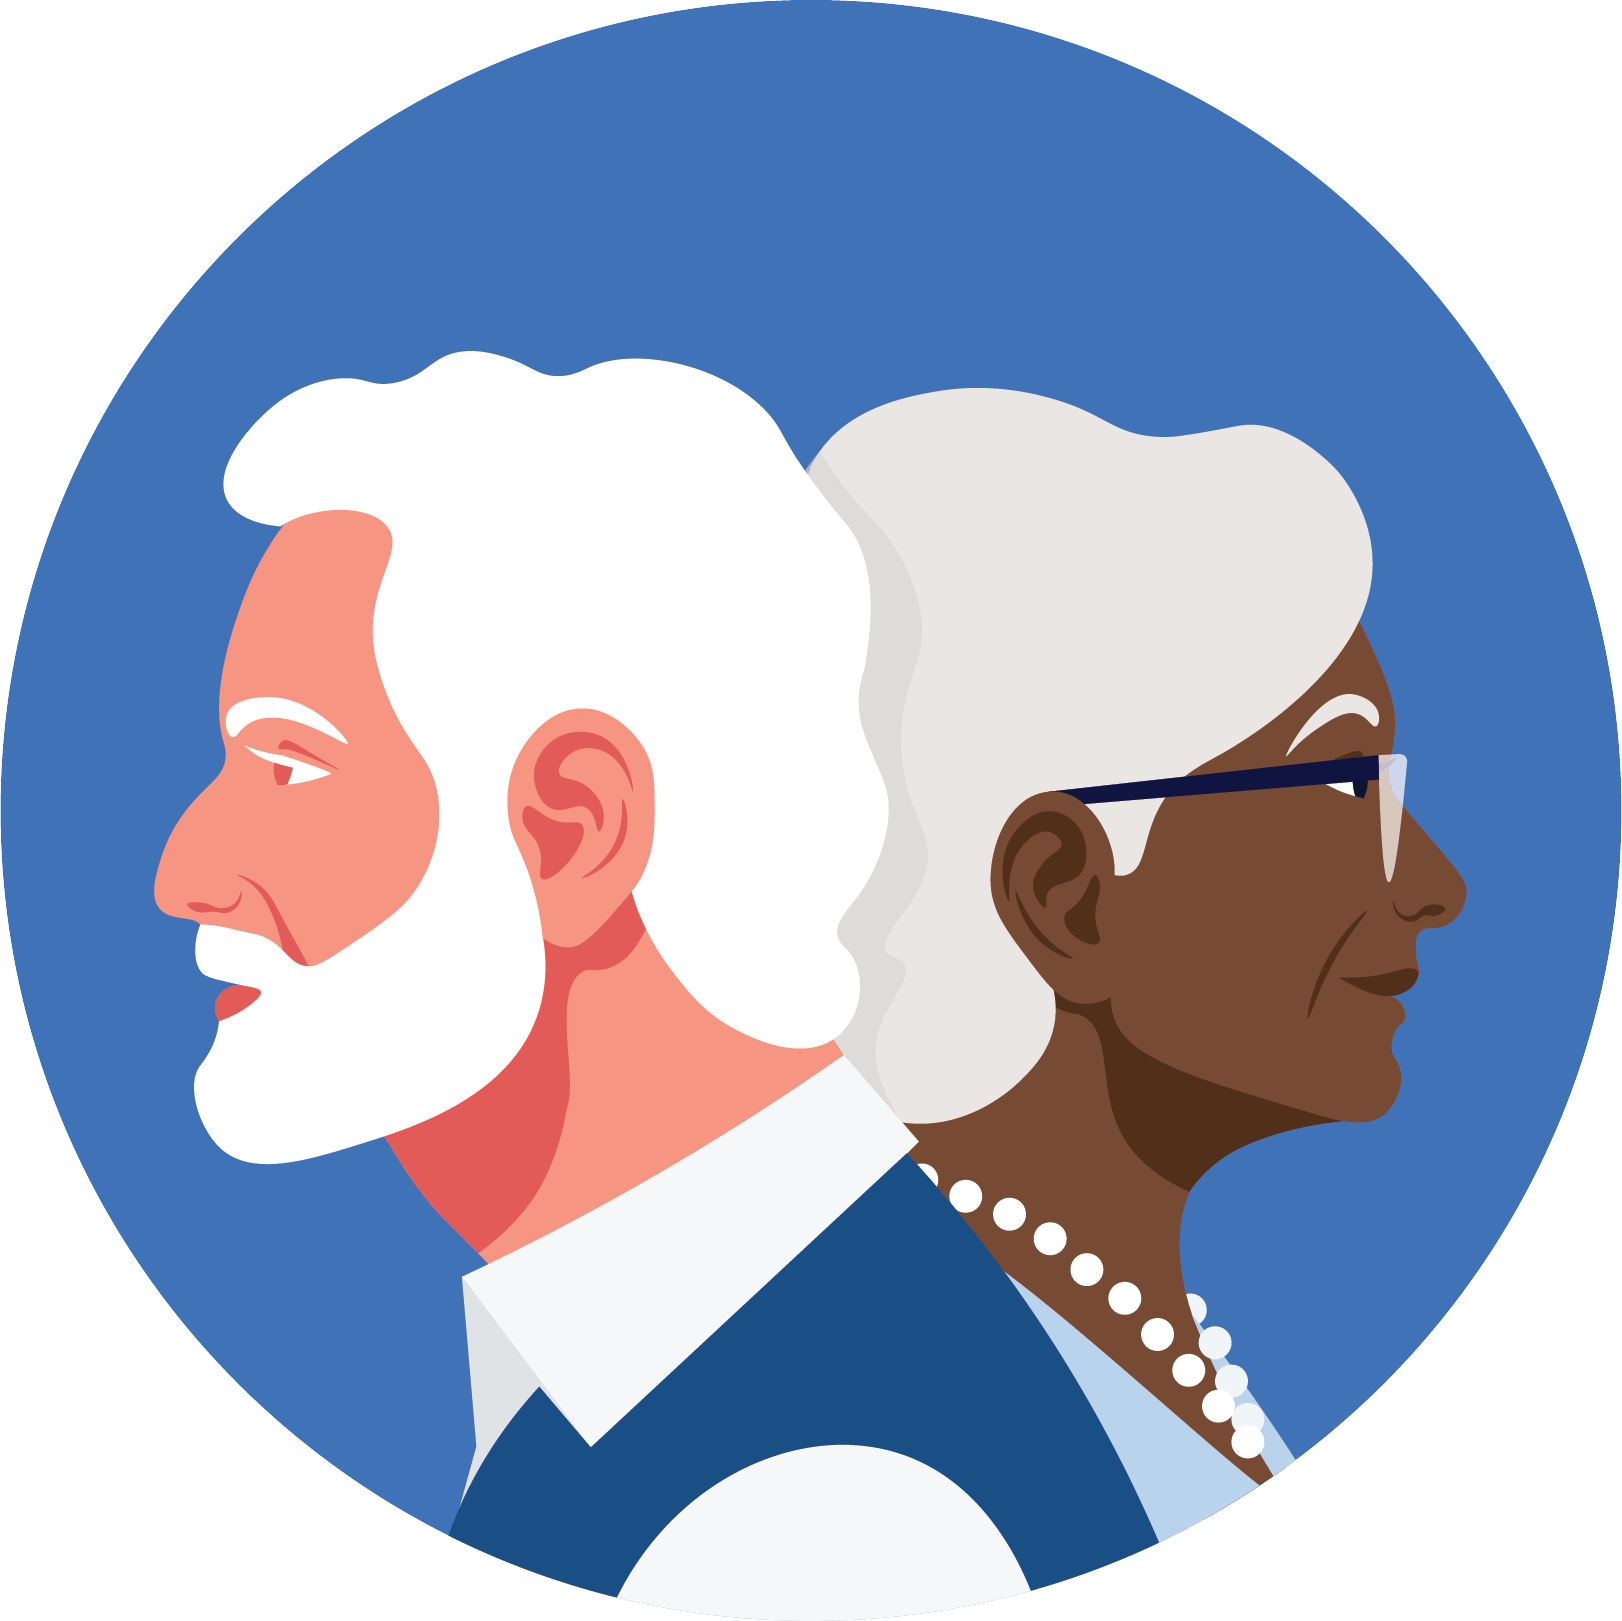 Male and Female seniors icon